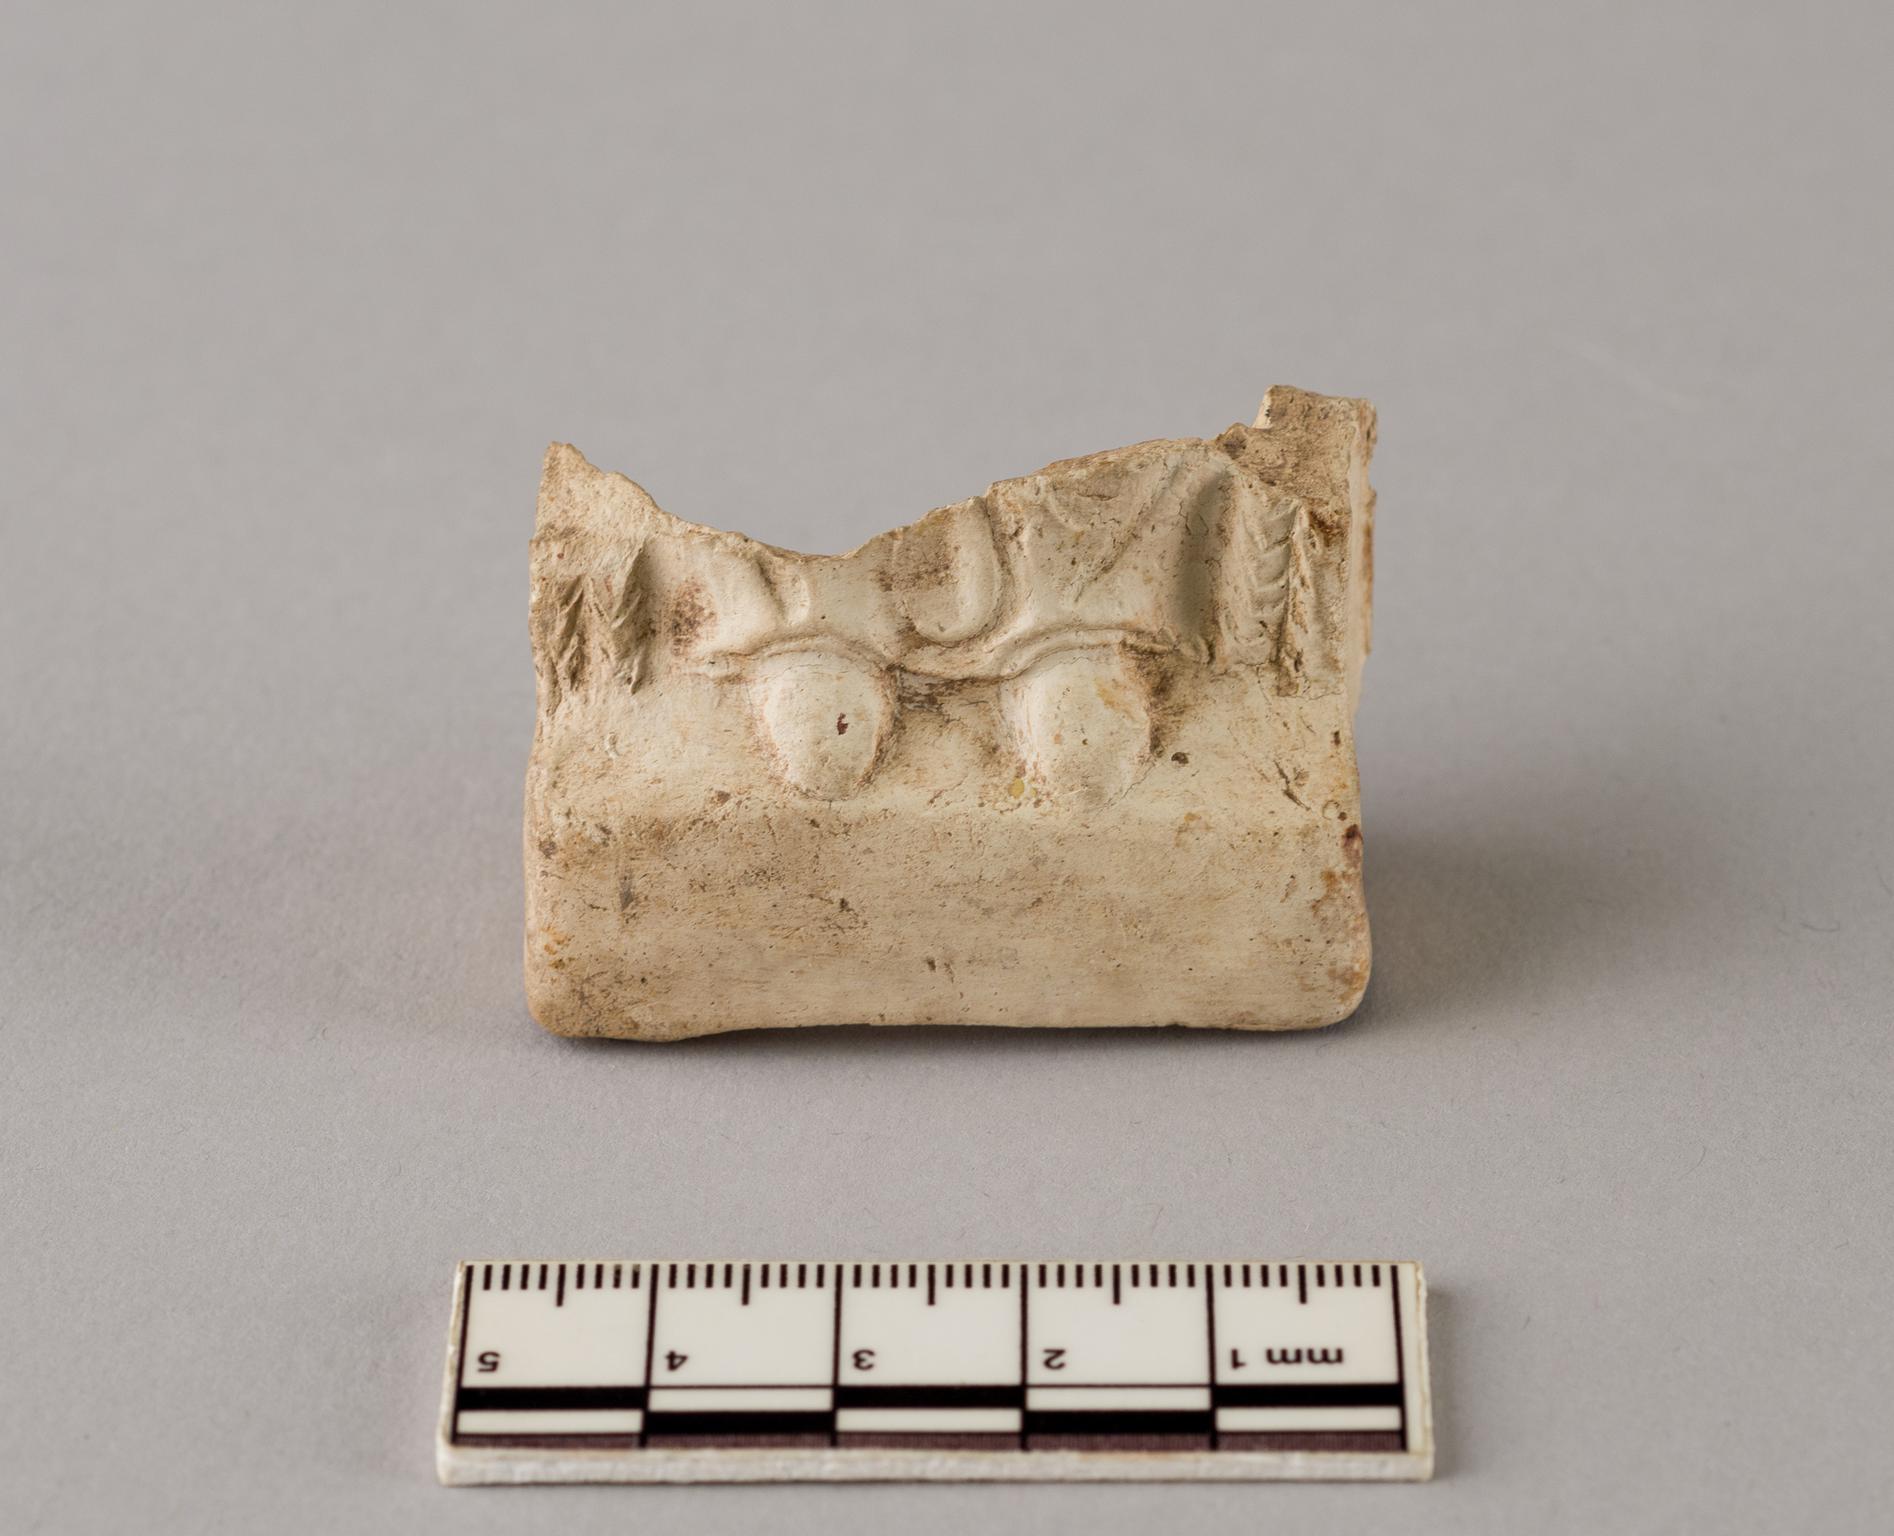 Roman ceramic figurine